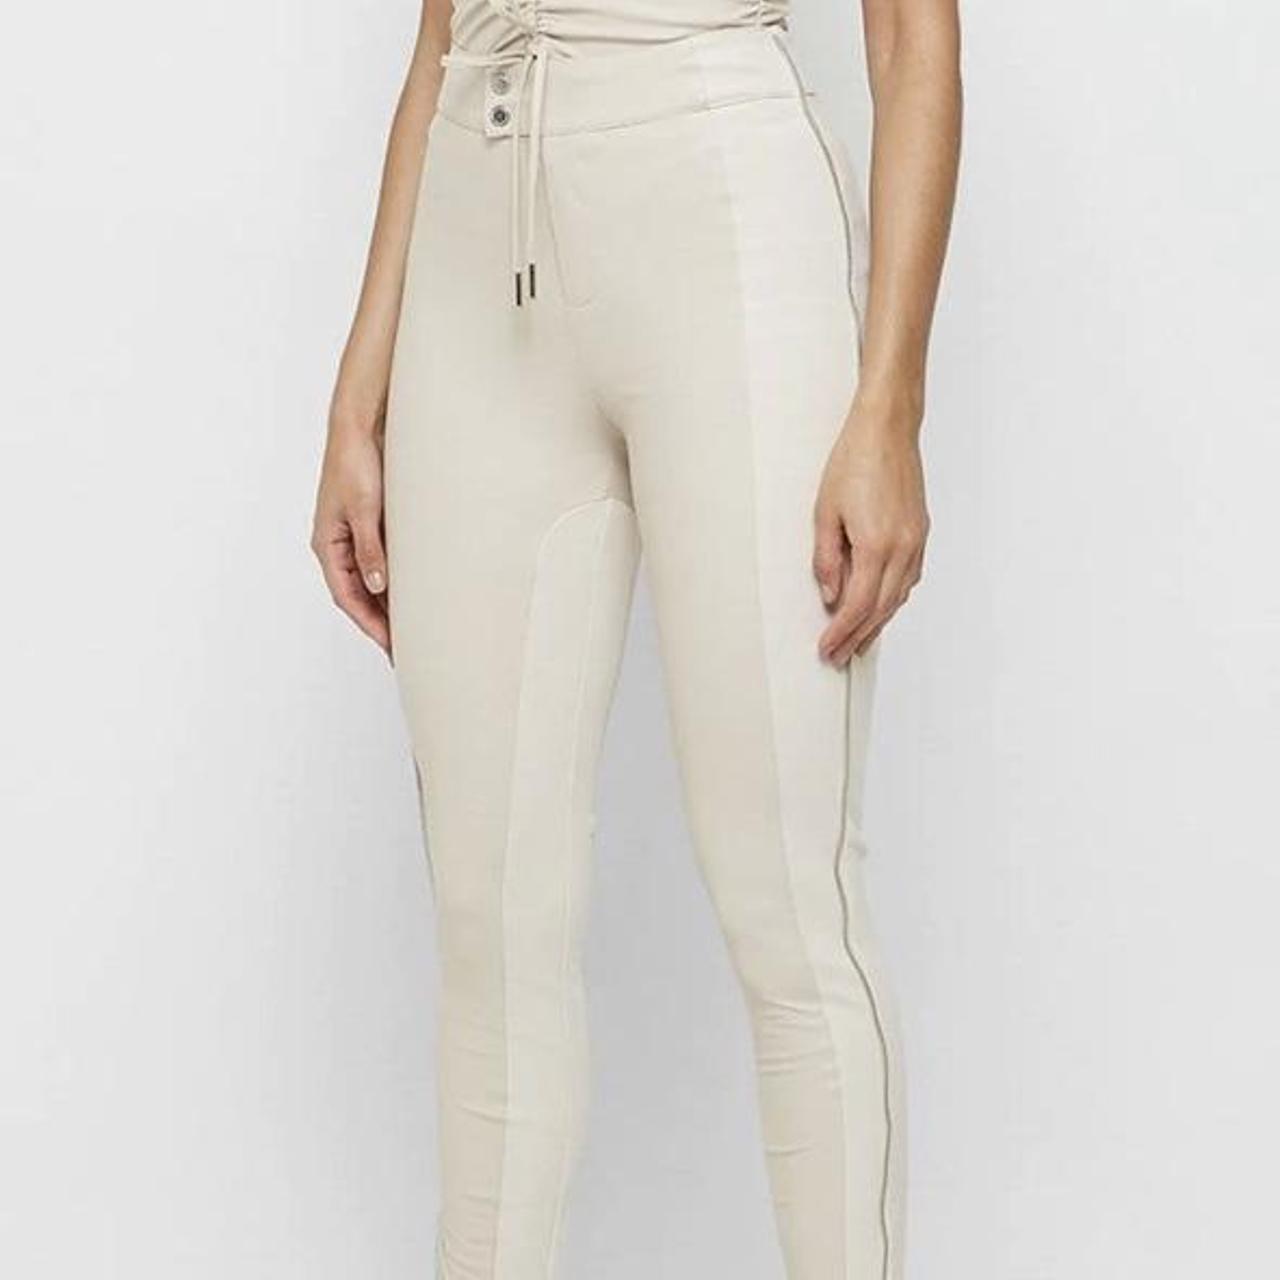 Manière de voir vegan leather split leggings in - Depop